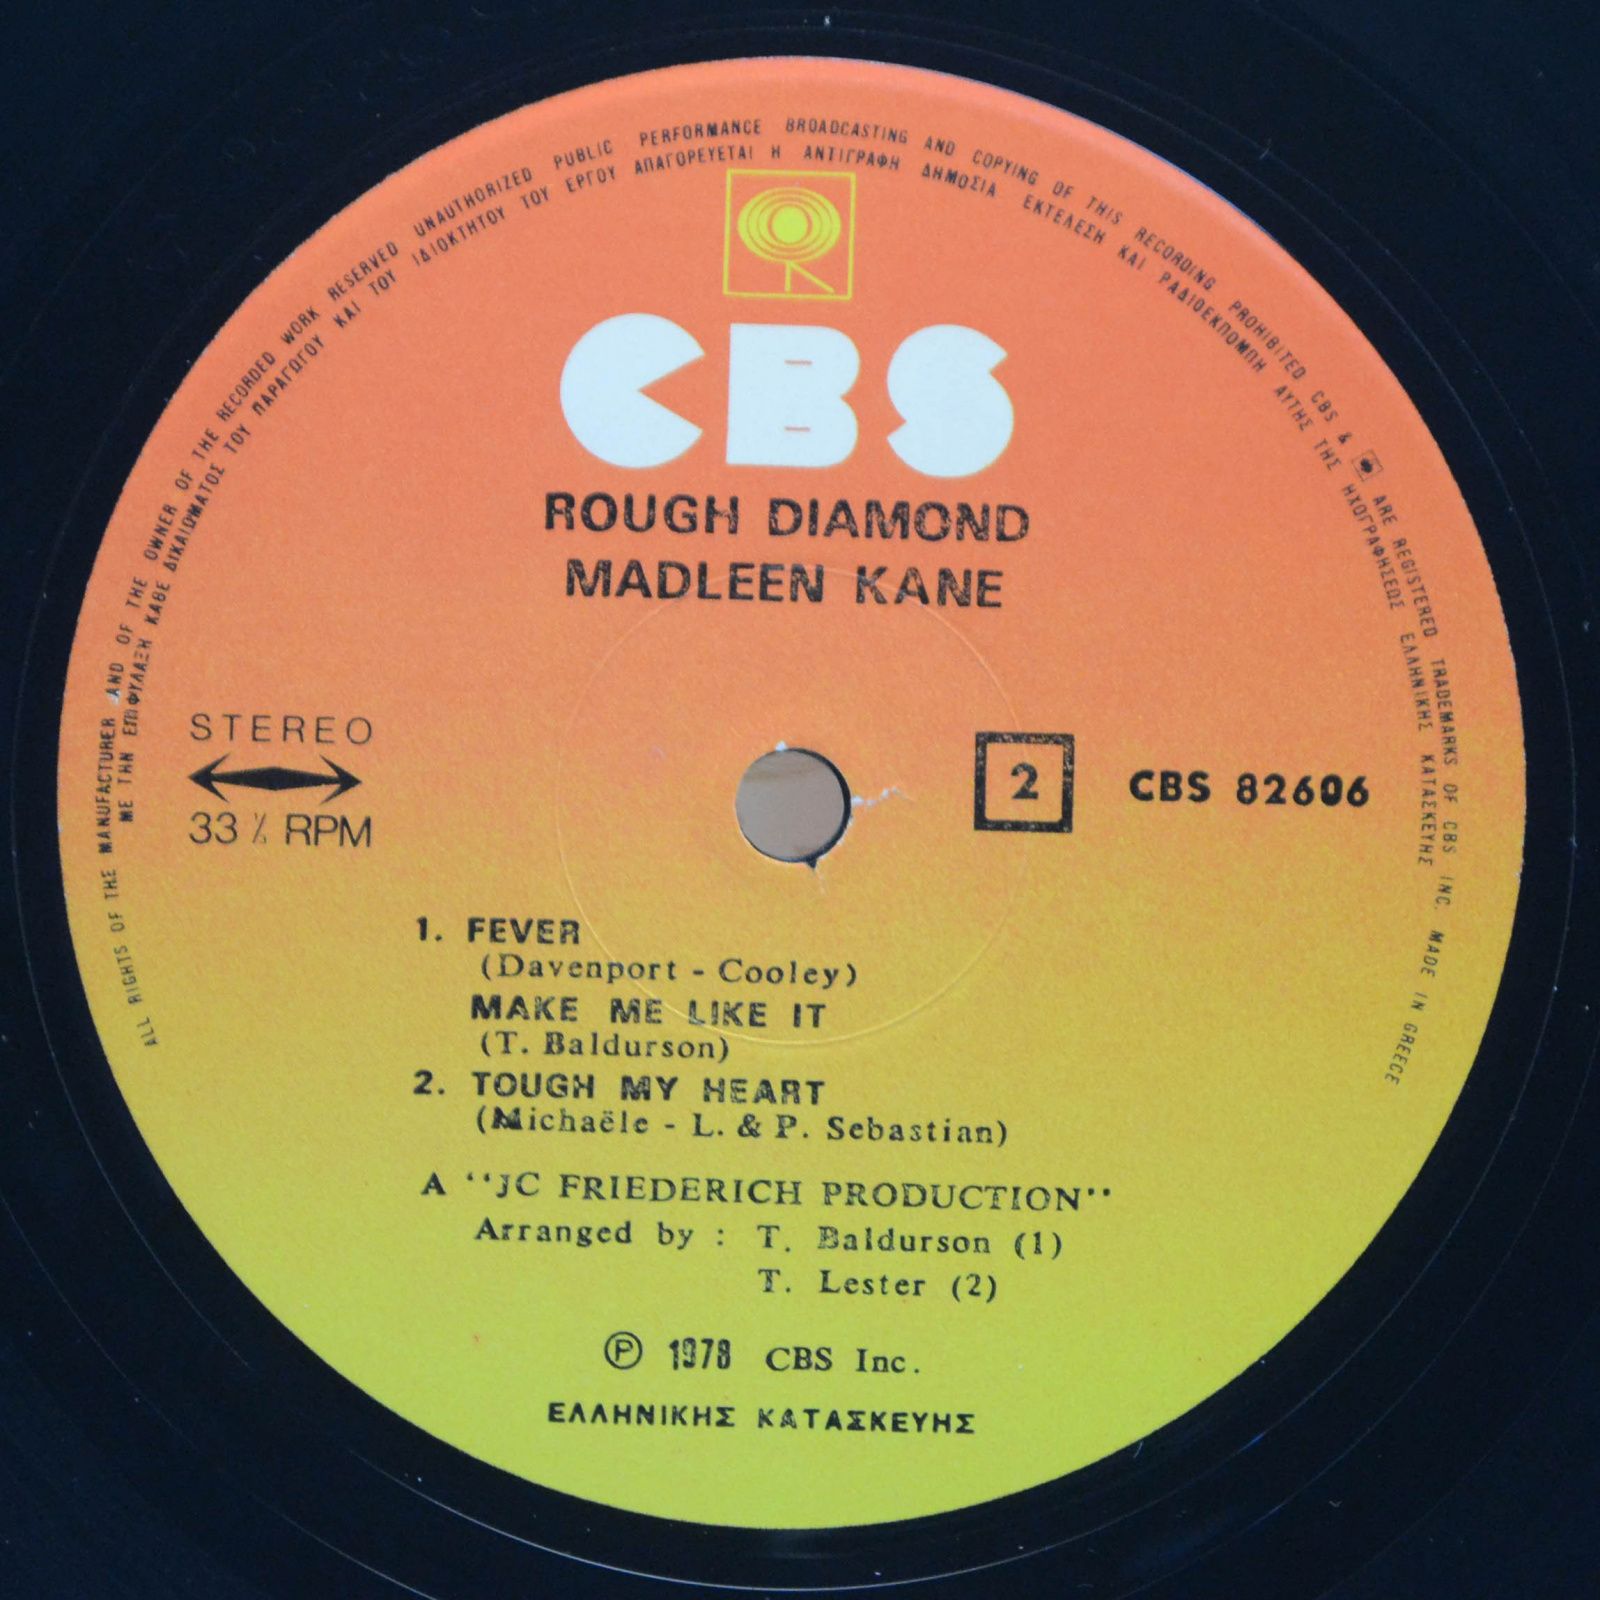 Madleen Kane — Rough Diamond, 1978